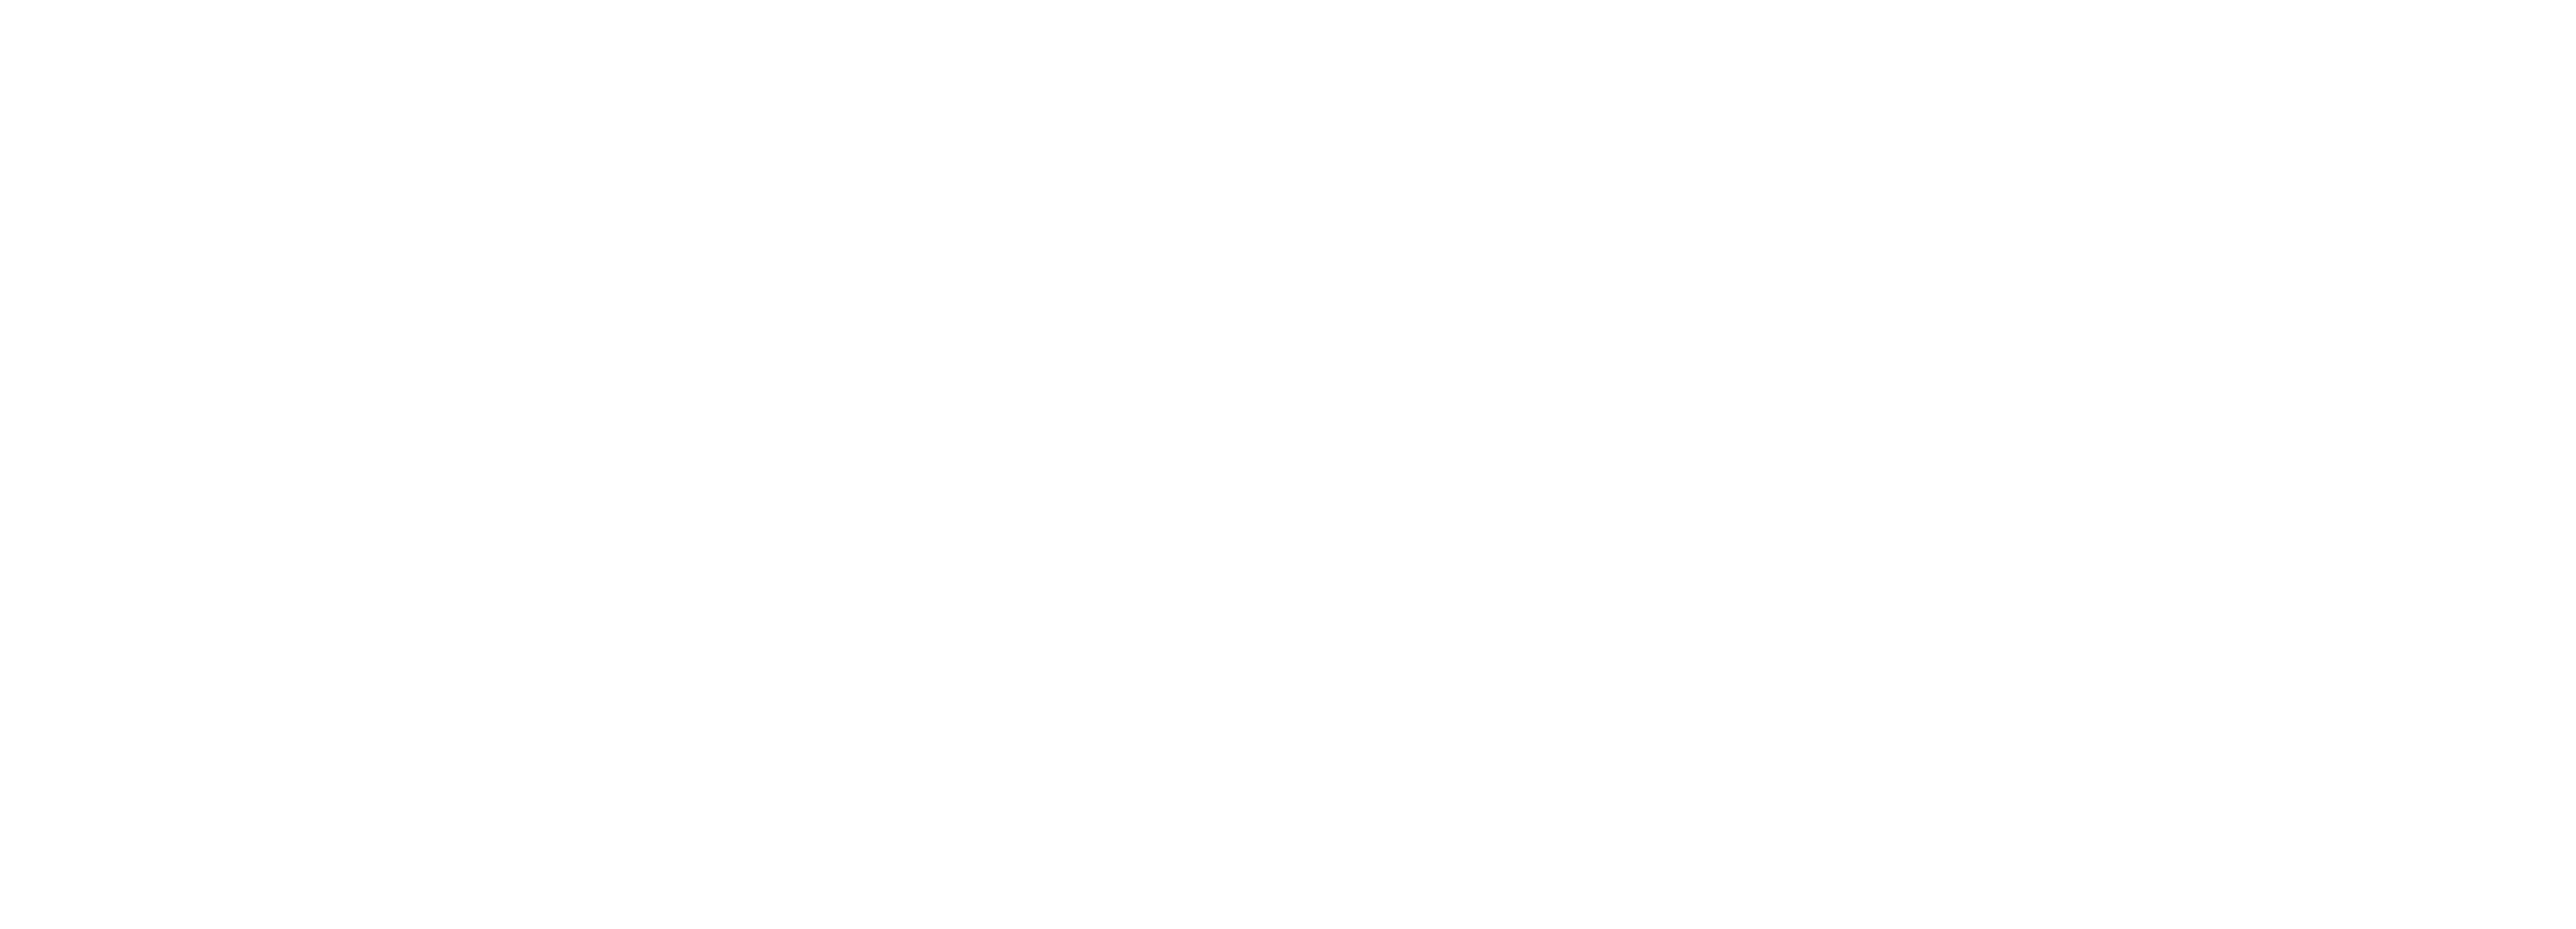 Lighthouse Group Logo